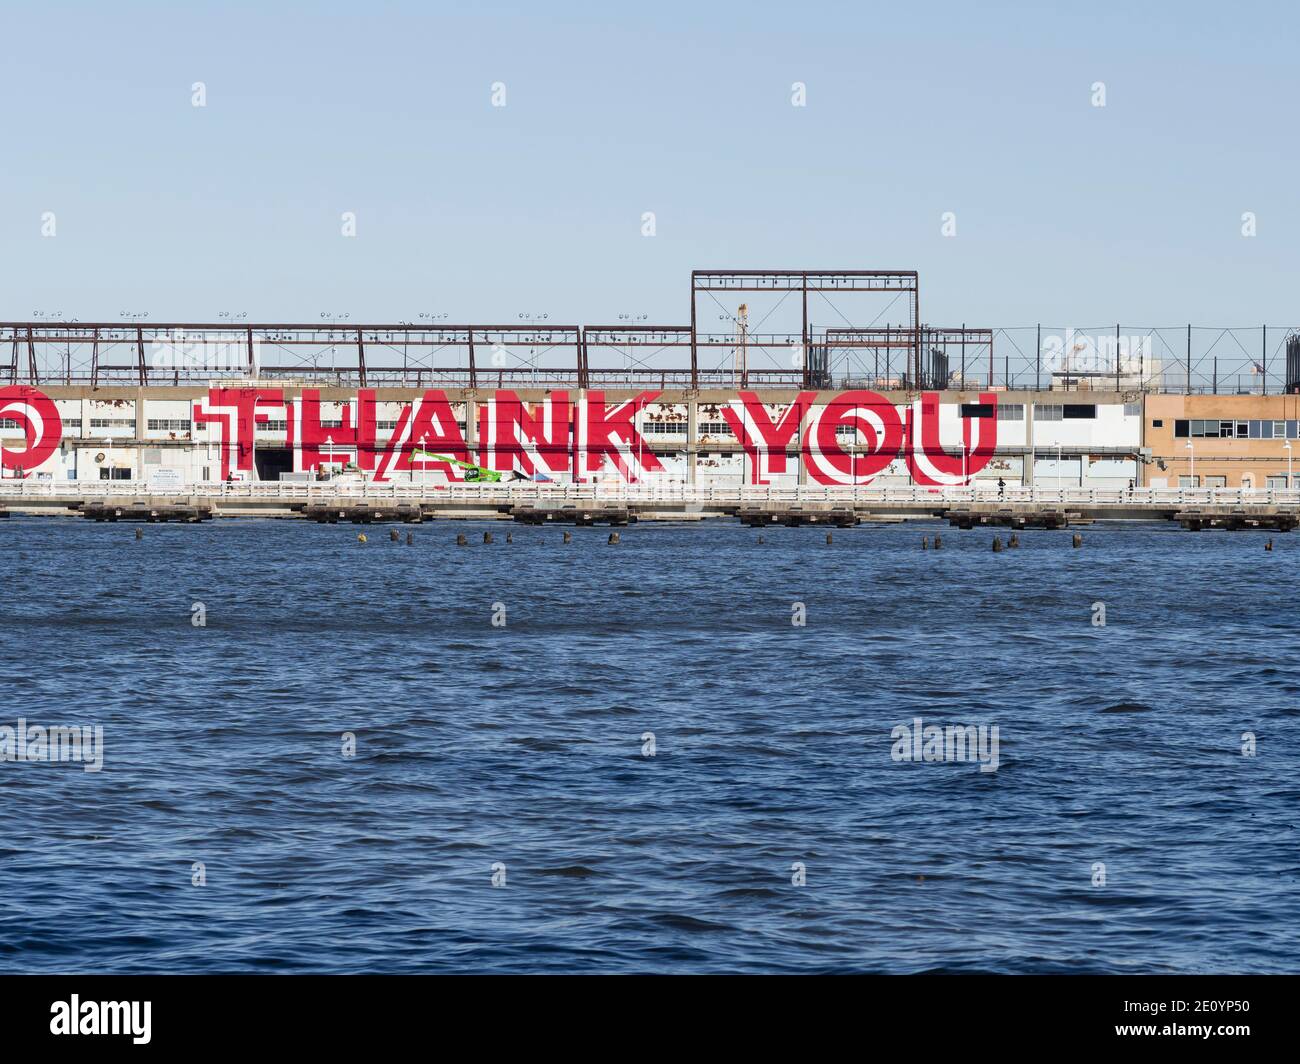 Graffiri 'Thank you' on a pier in the Hudson river Stock Photo